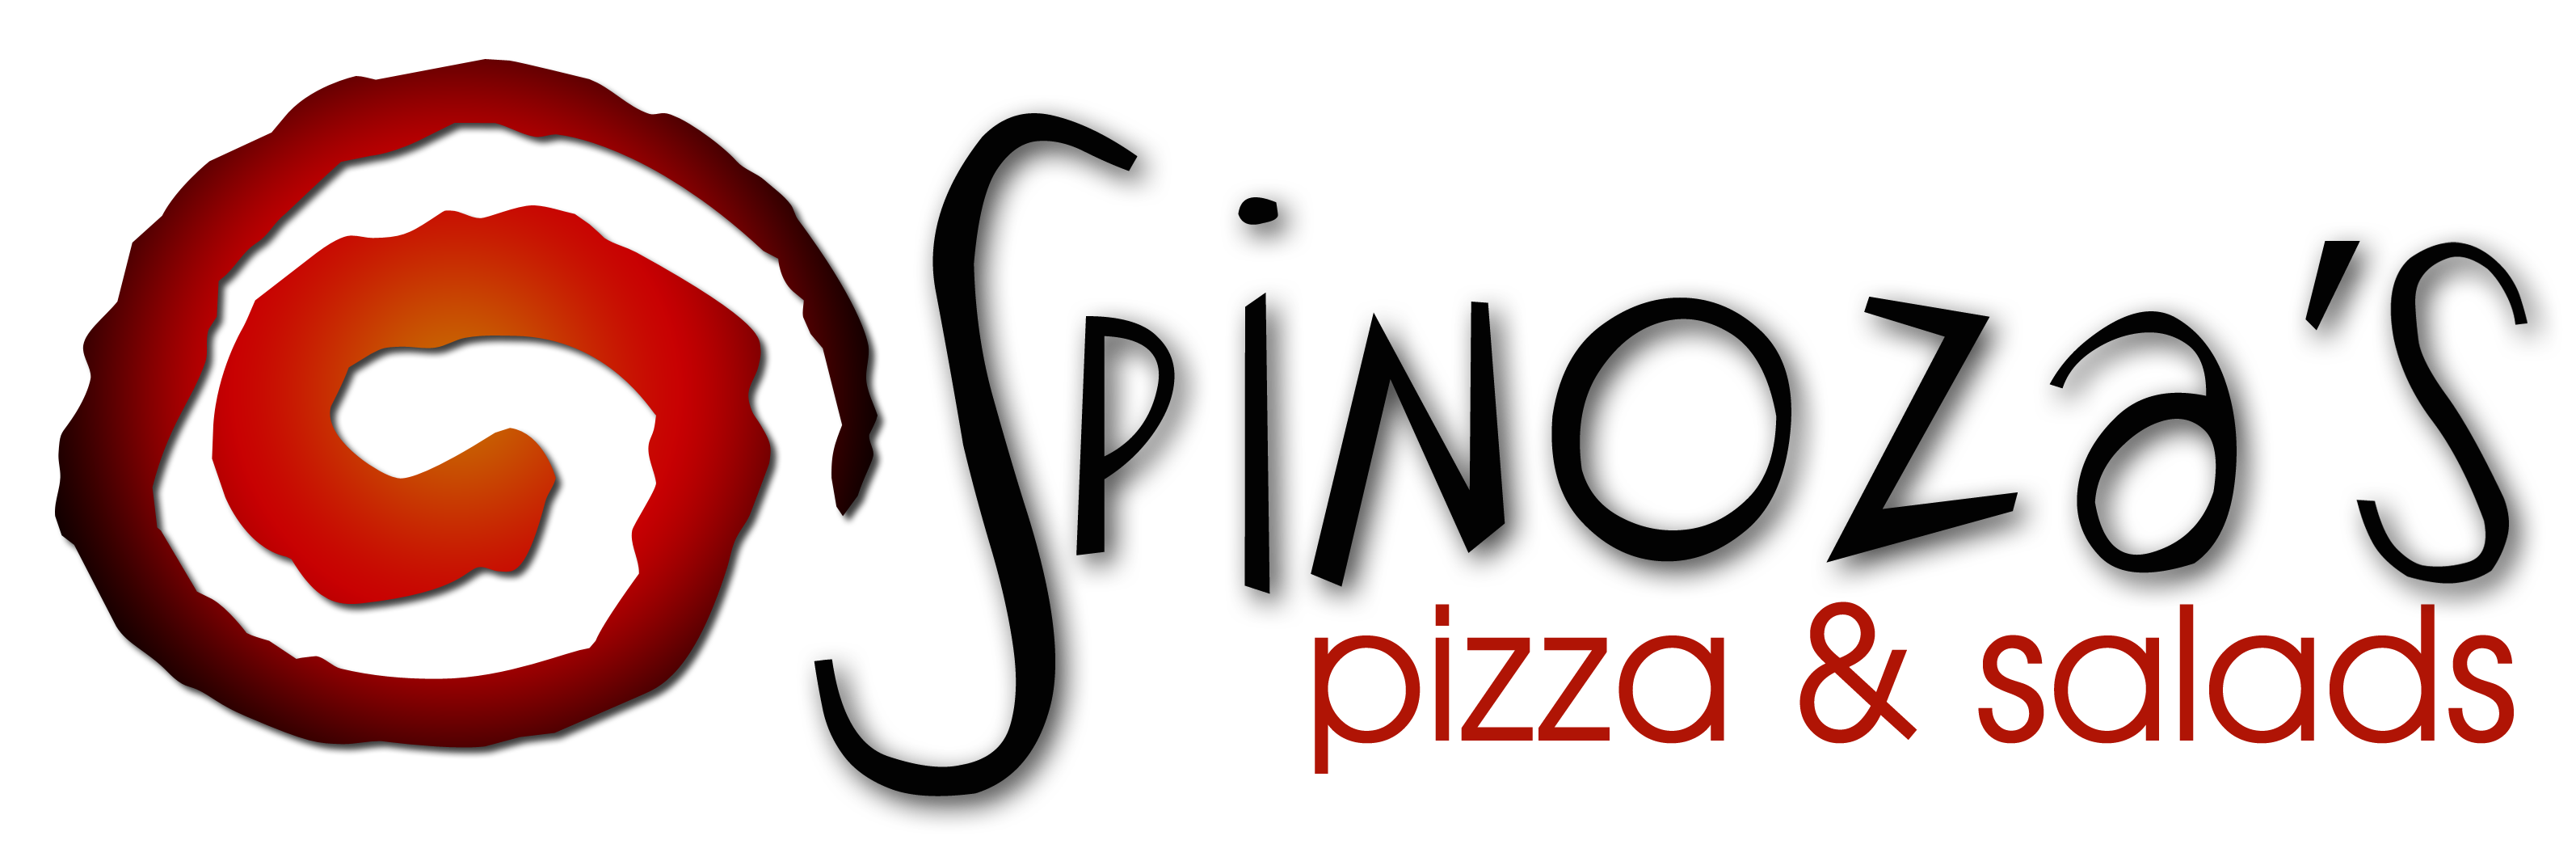 Spinoza's Pizza & Salads